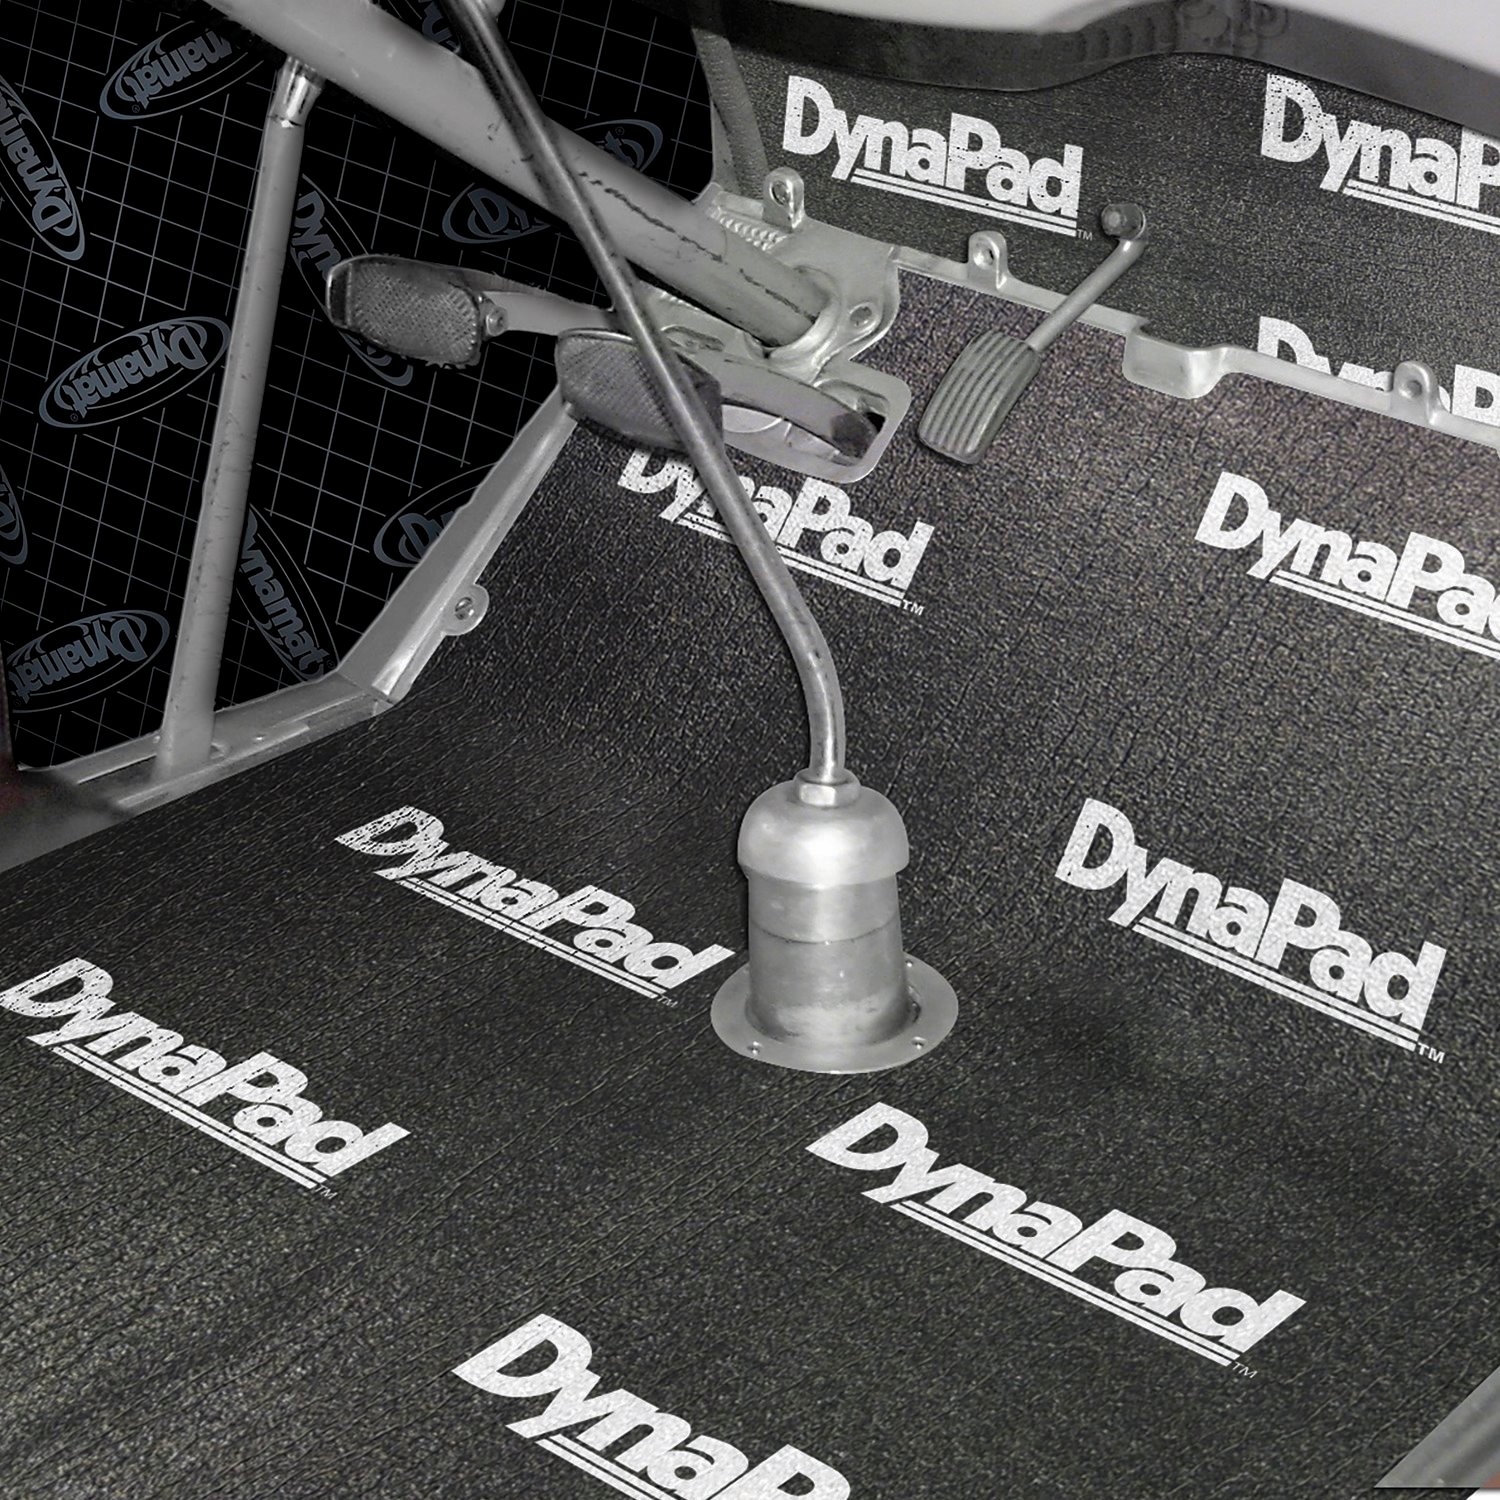 1- 32"x 54" x 3/8" (813mm x 1372mm x 7mm) piece of DynaPad Total Coverage: 12 ft² (1.11 m²)